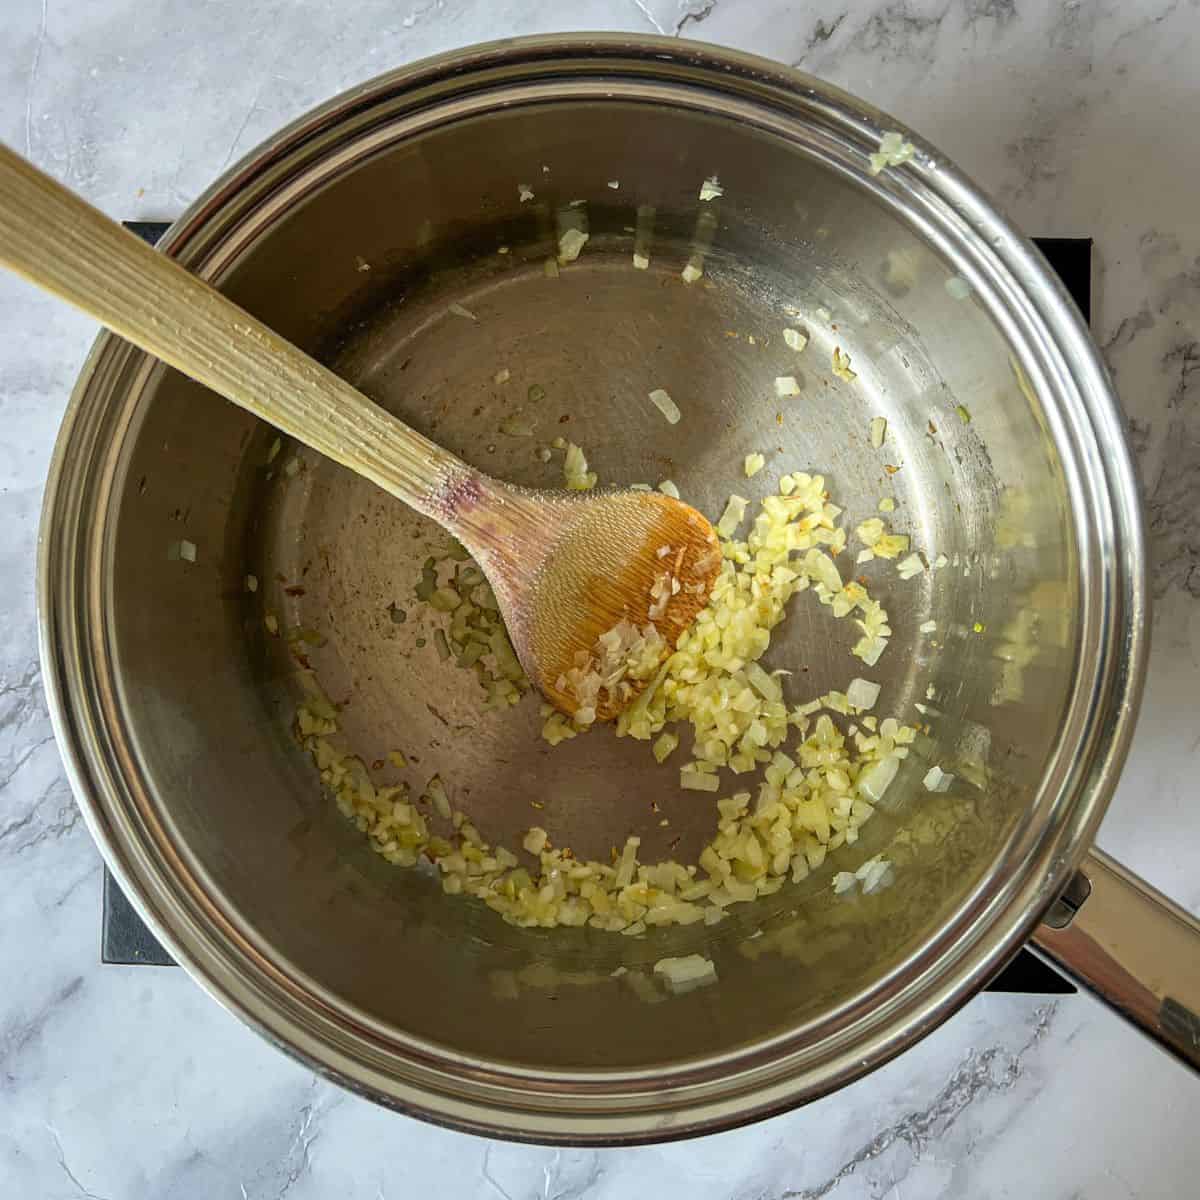 A saucepan containing chopped onion and garlic.